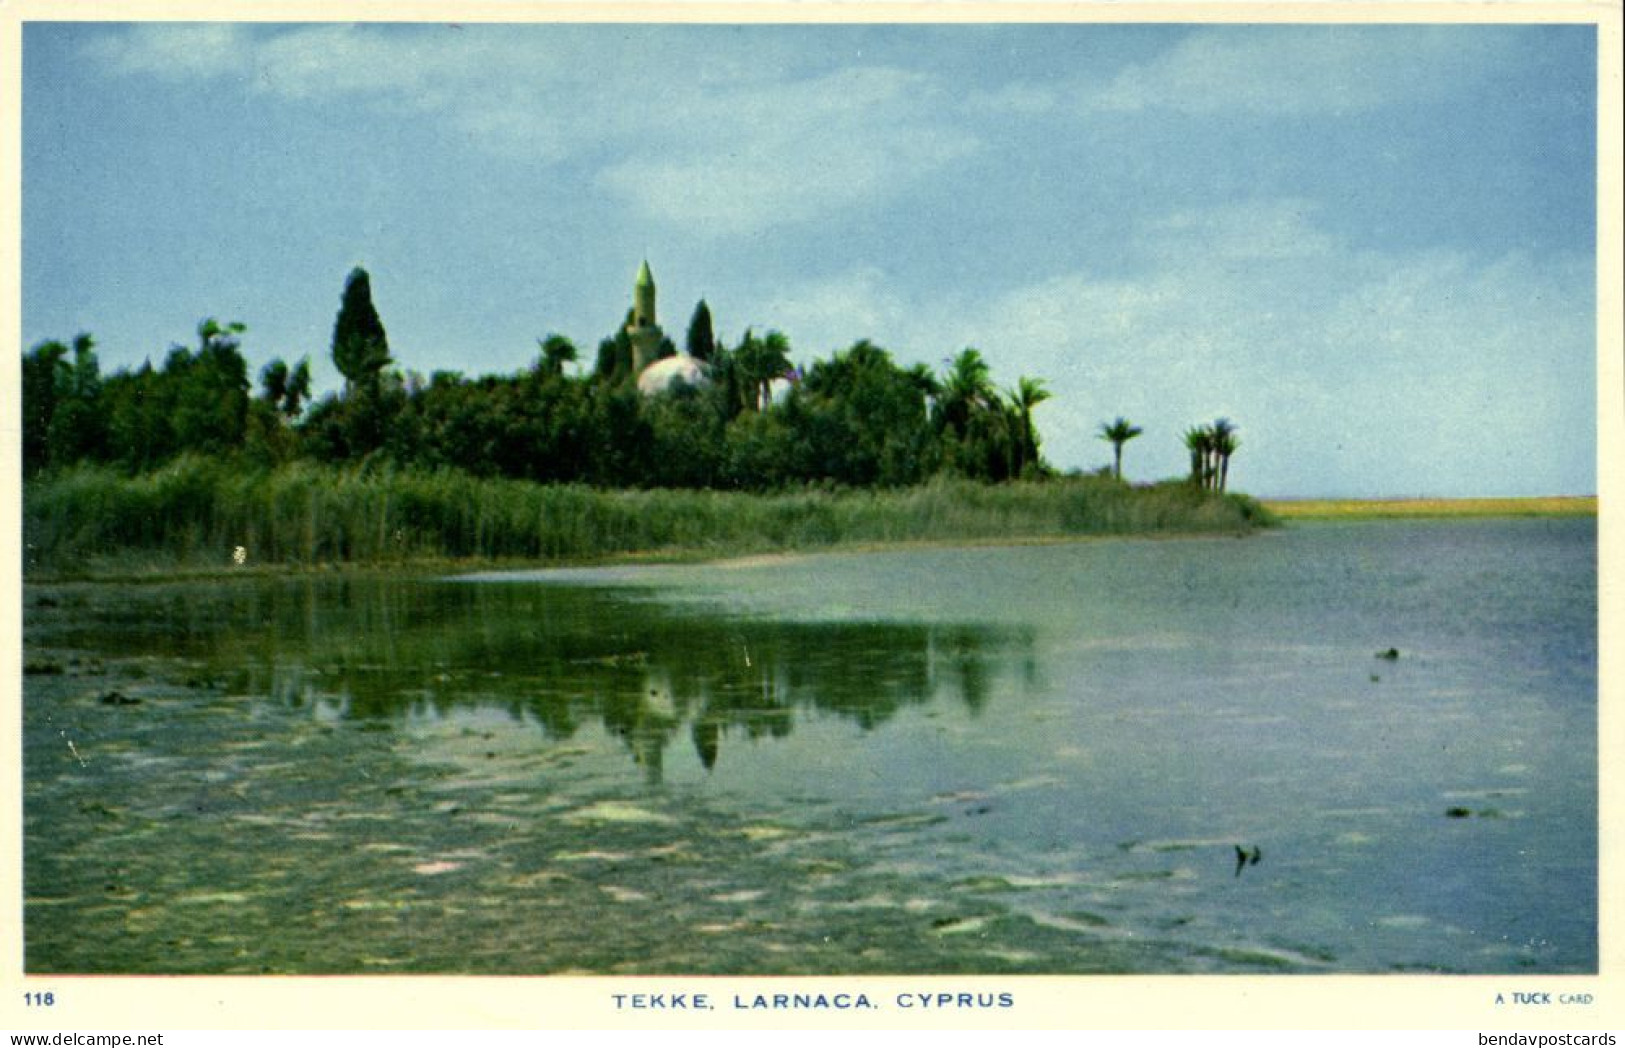 Cyprus, LARNACA, Hala Sultan Tekke Mosque (1960s) Raphael Tuck 118 Postcard - Cyprus